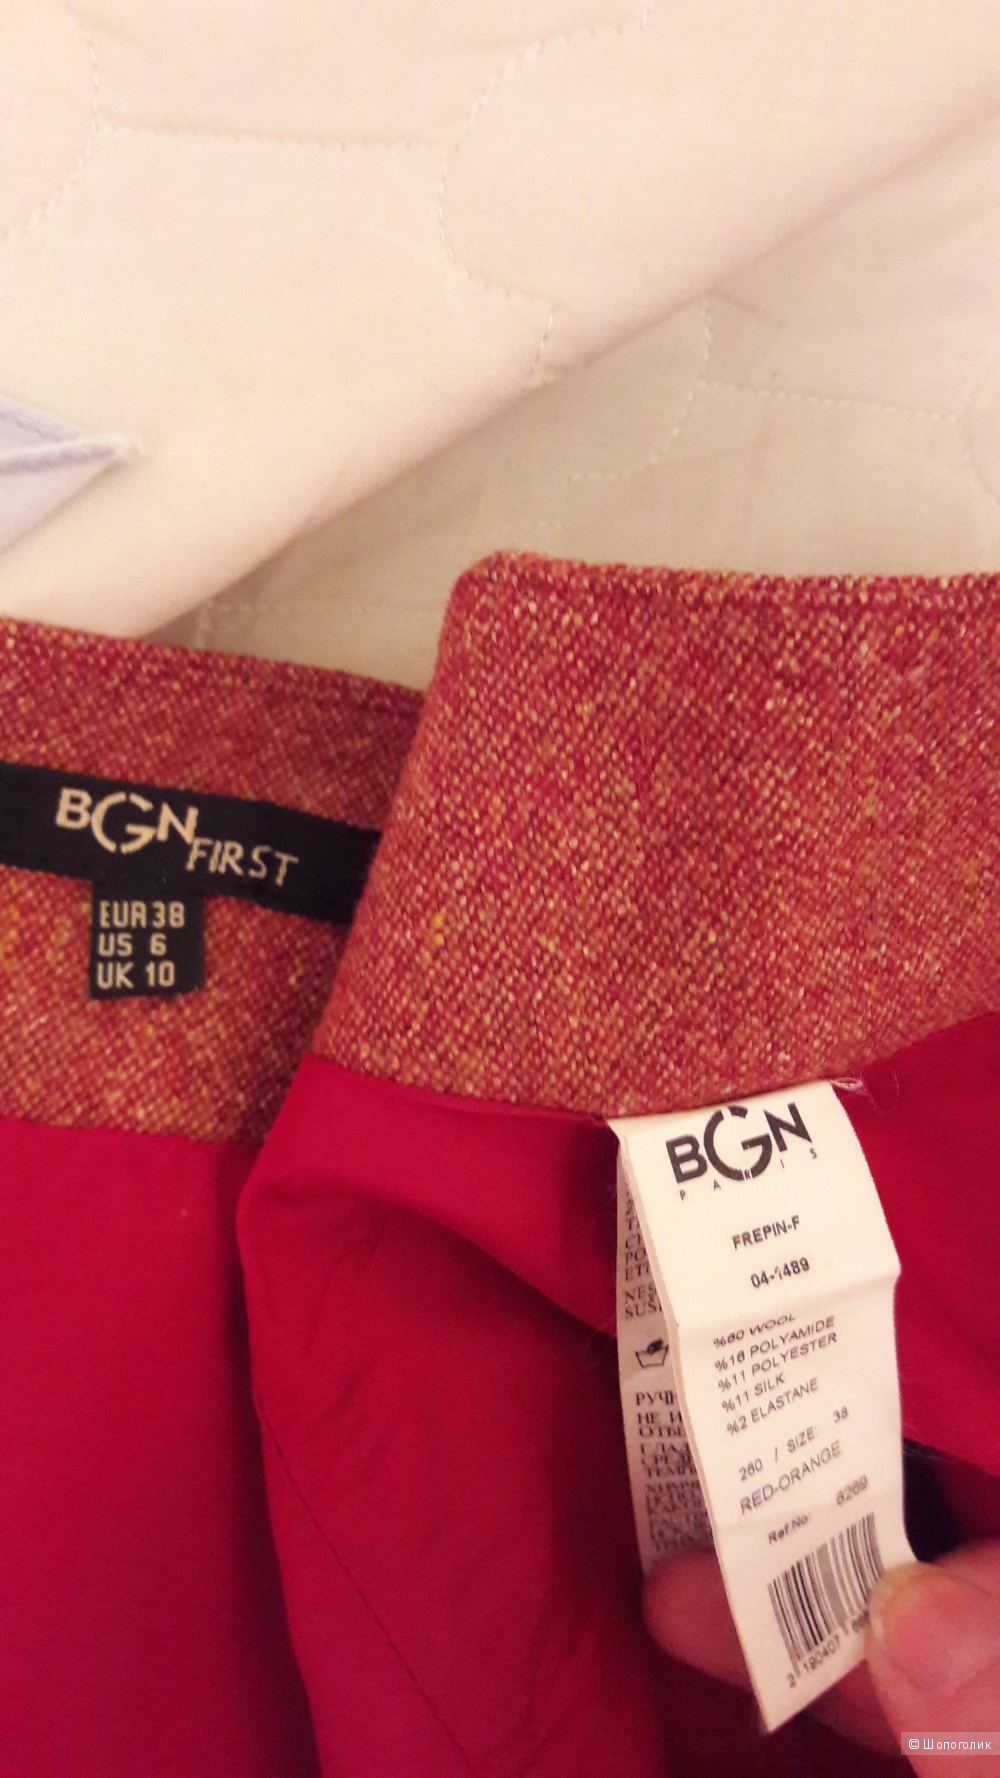 BGN first: полушерстяная юбка с запАхом, евро 38